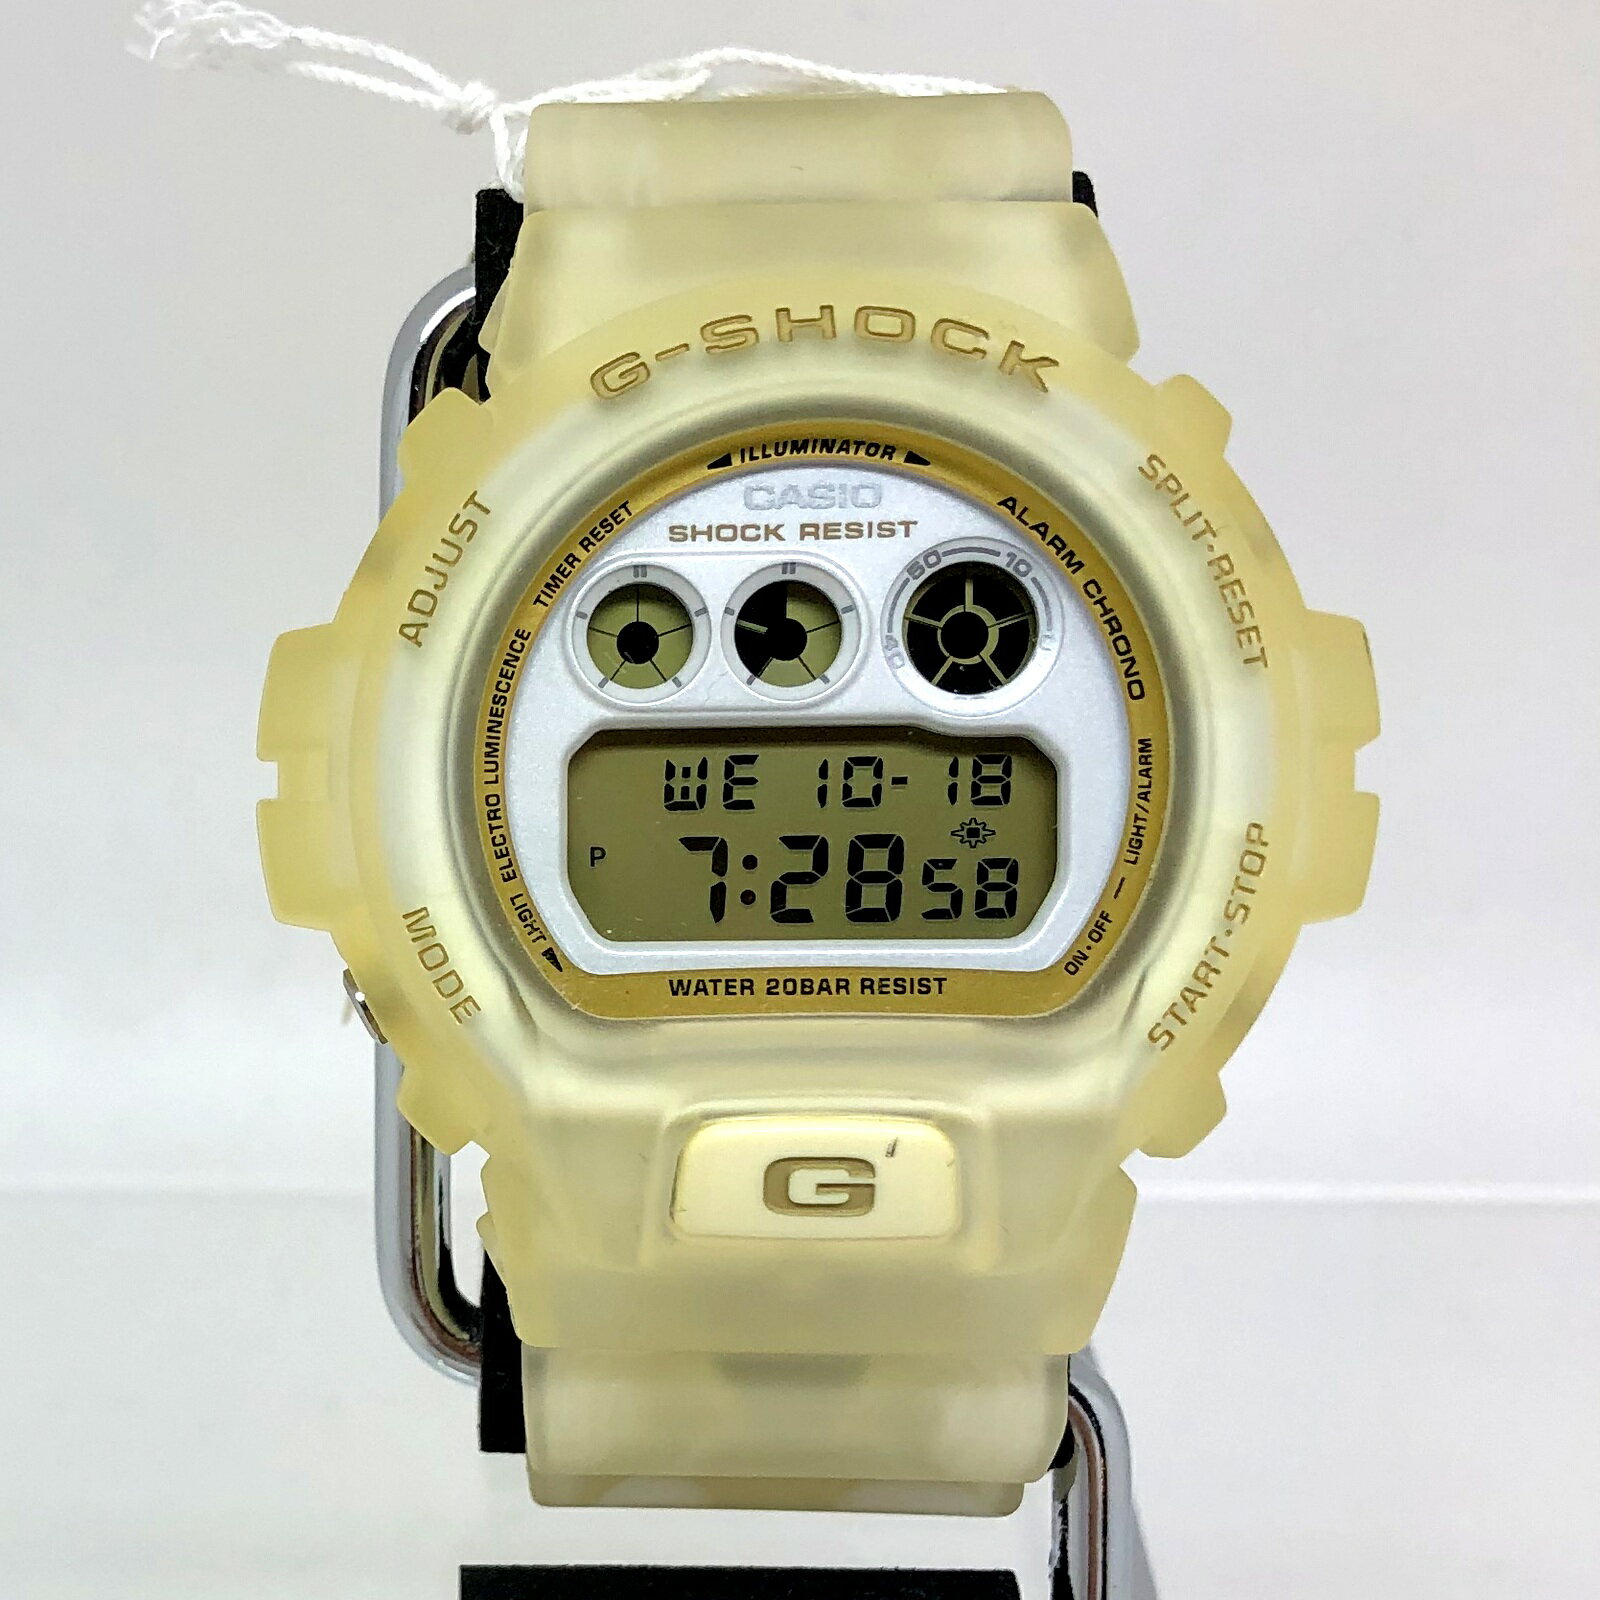 G-SHOCK ジーショック CASIO カシオ 腕時計 DW-6900XLV-7JR 三つ目 デジタル クォーツ プレシャスハートセレクション ホワイト ゴールド 三国ケ丘店 IT50BT0OPVH8 